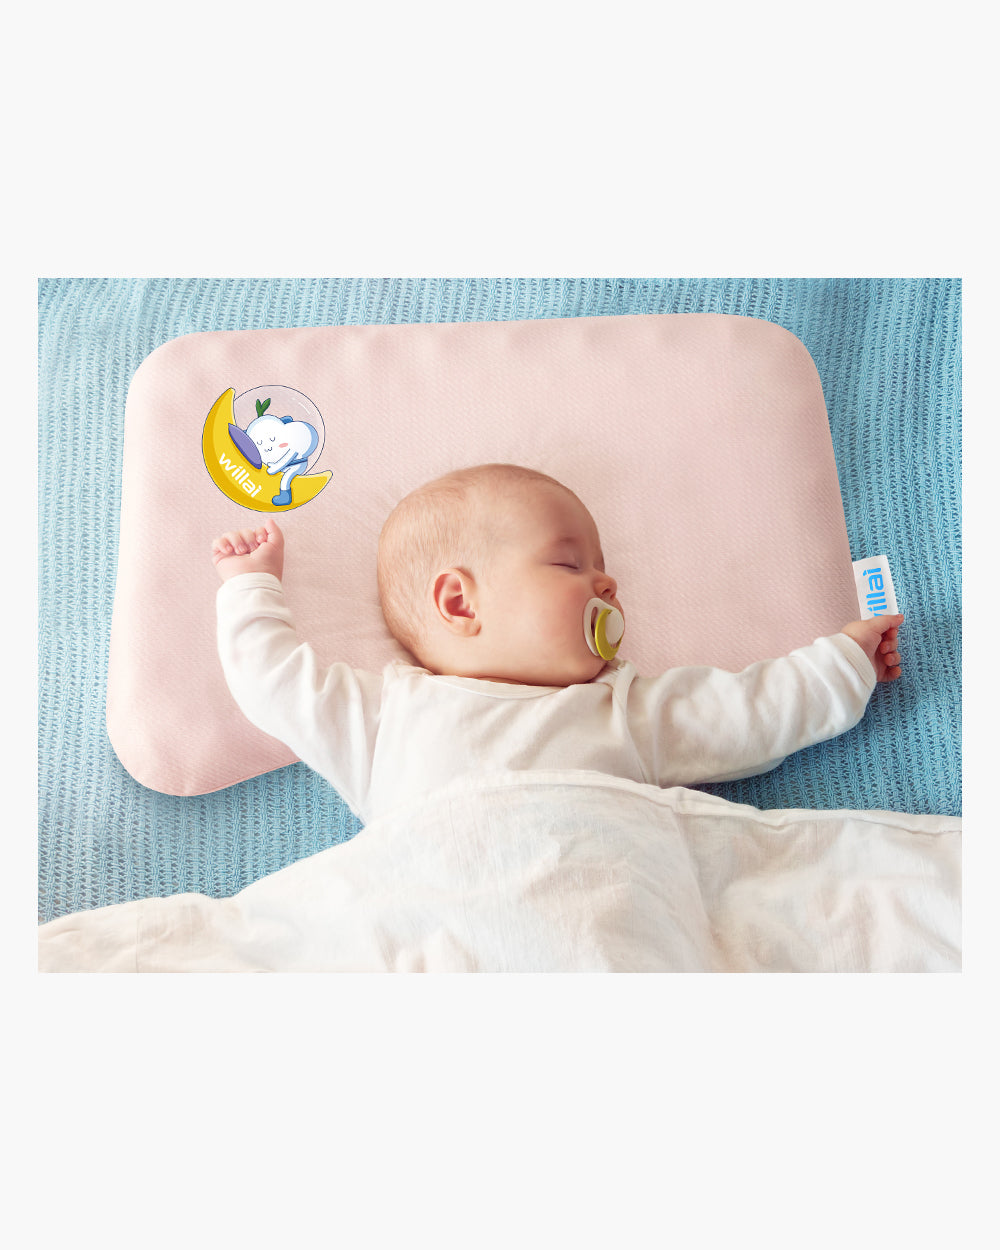 Willai 4D Nano Slicone Baby Pillow For Sleeping 6